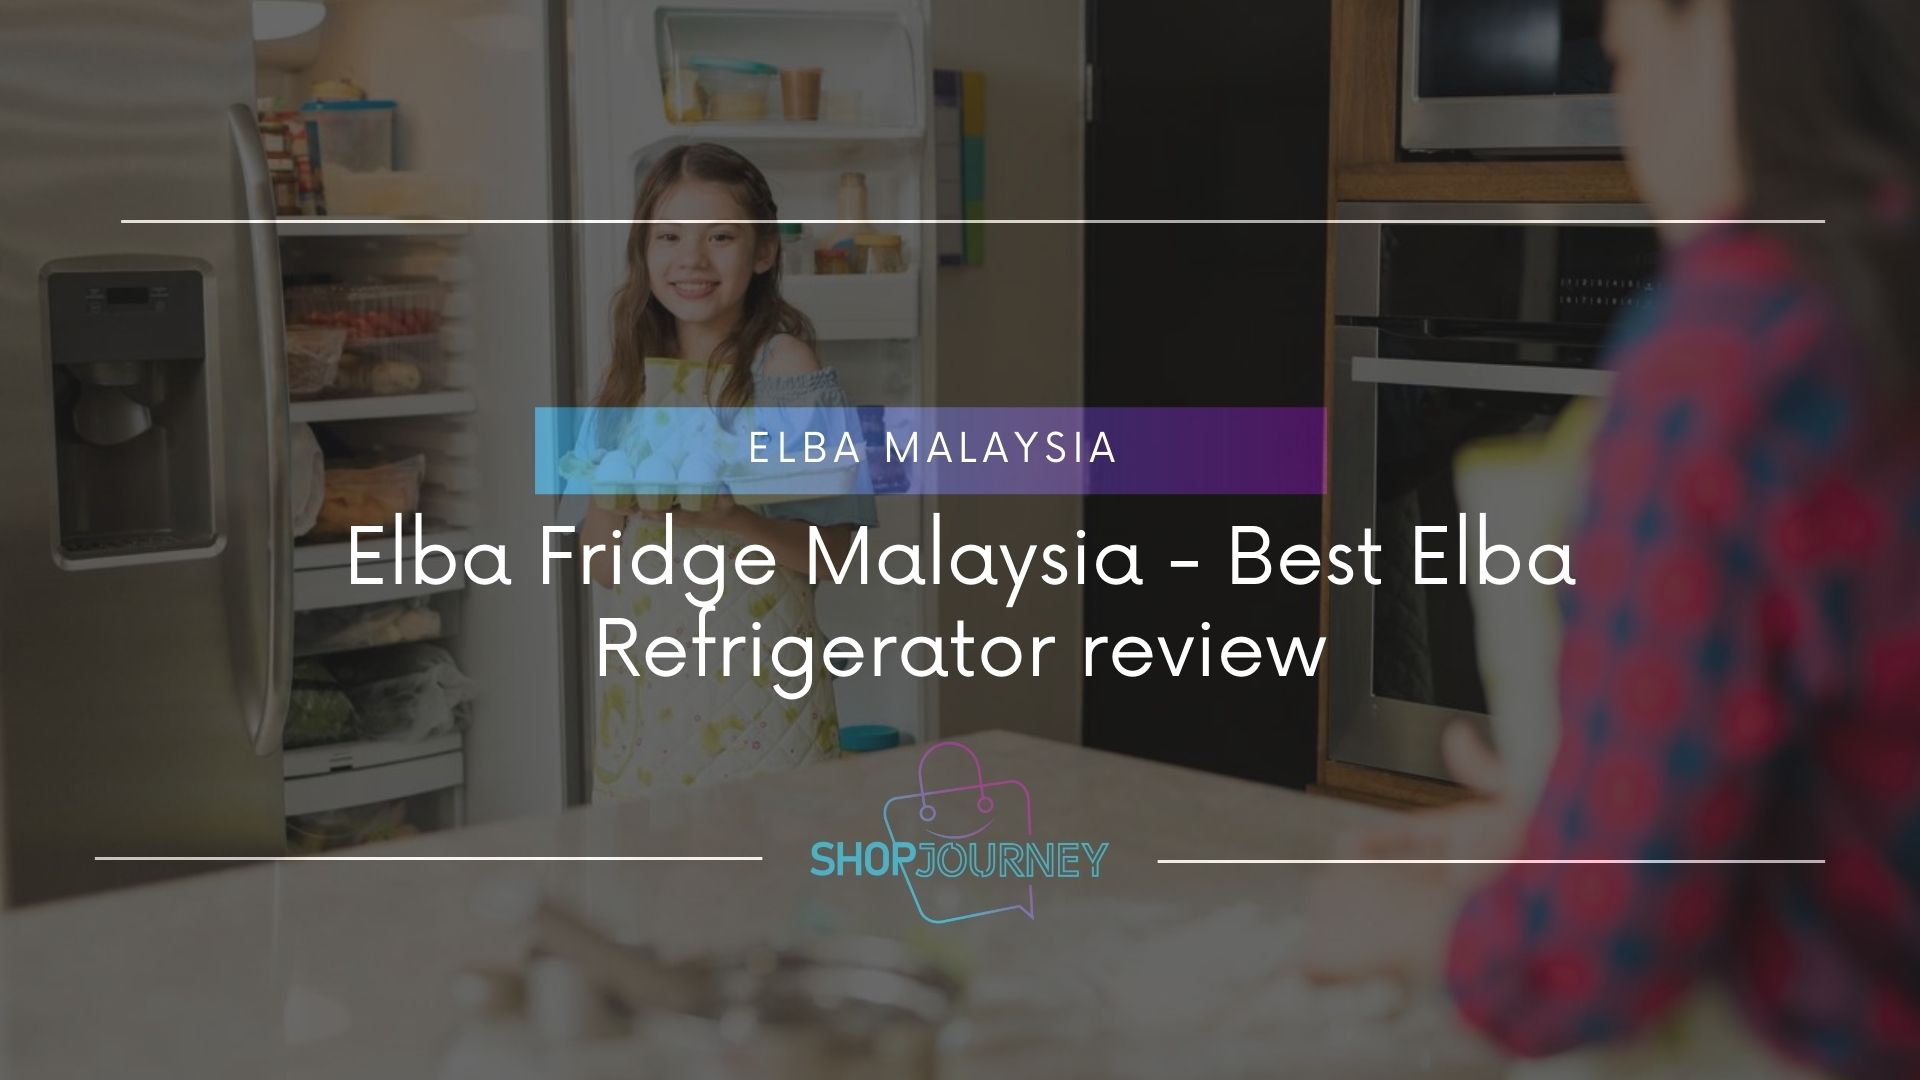 Elba Fridge Malaysia - Best Elba Refrigerator review